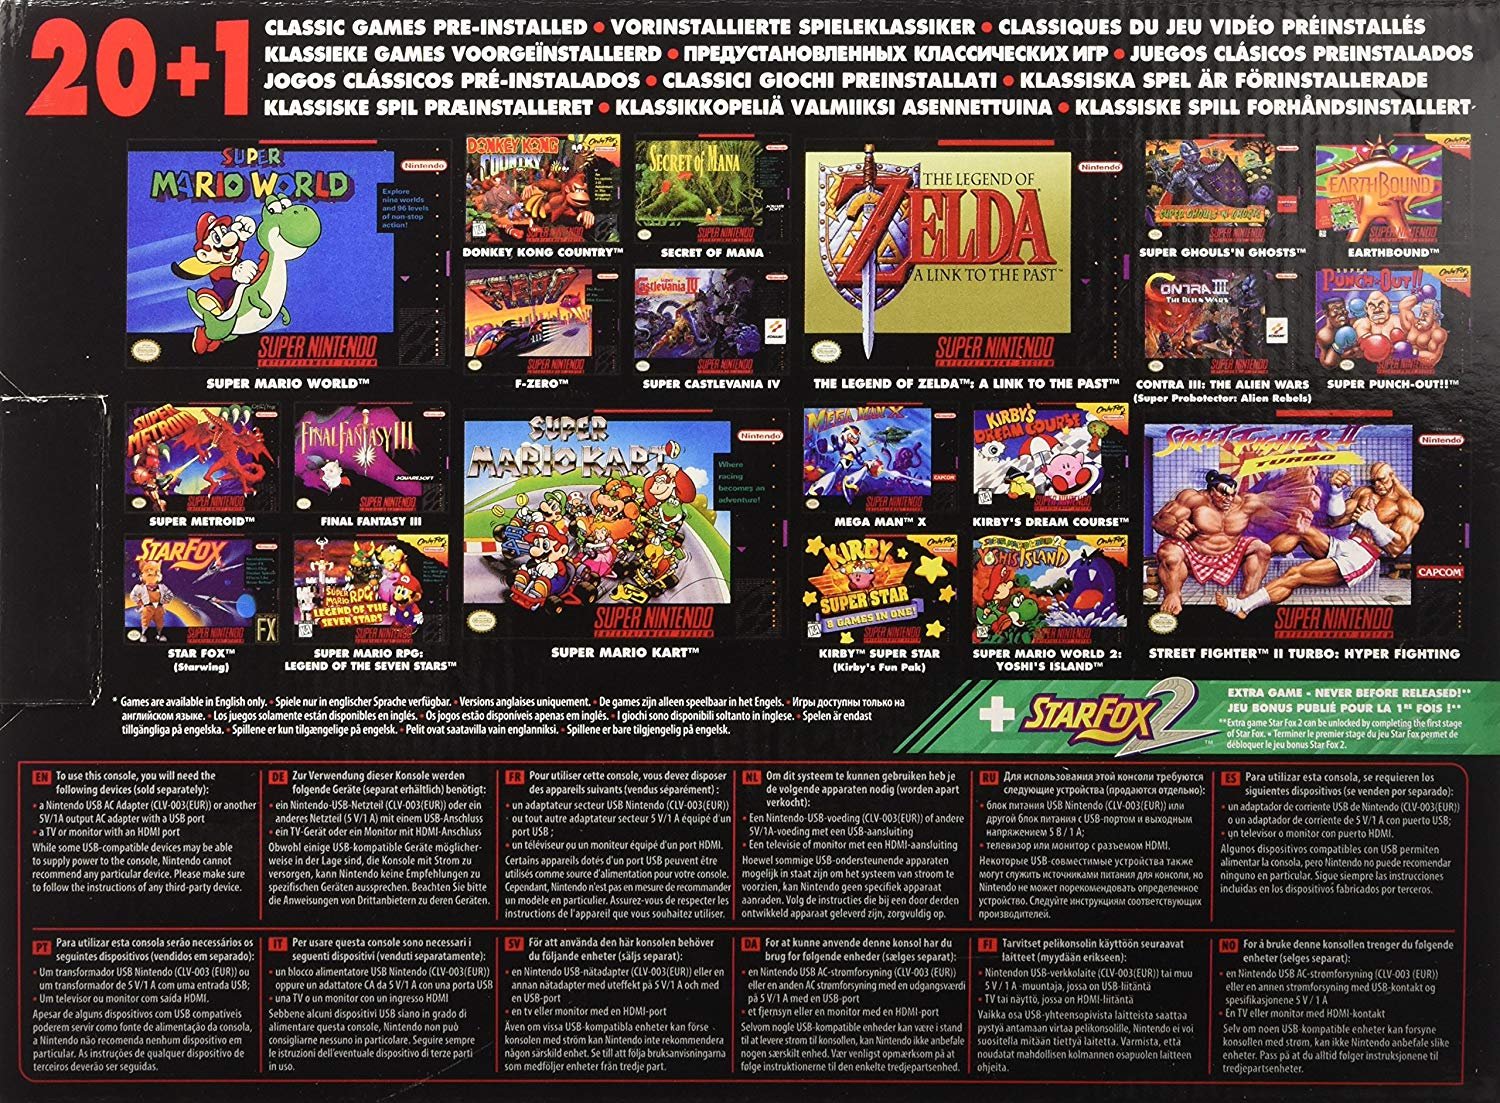 SNES Nintendo Classic Mini: Super Nintendo Entertainment System (Europe), Not Region Locked